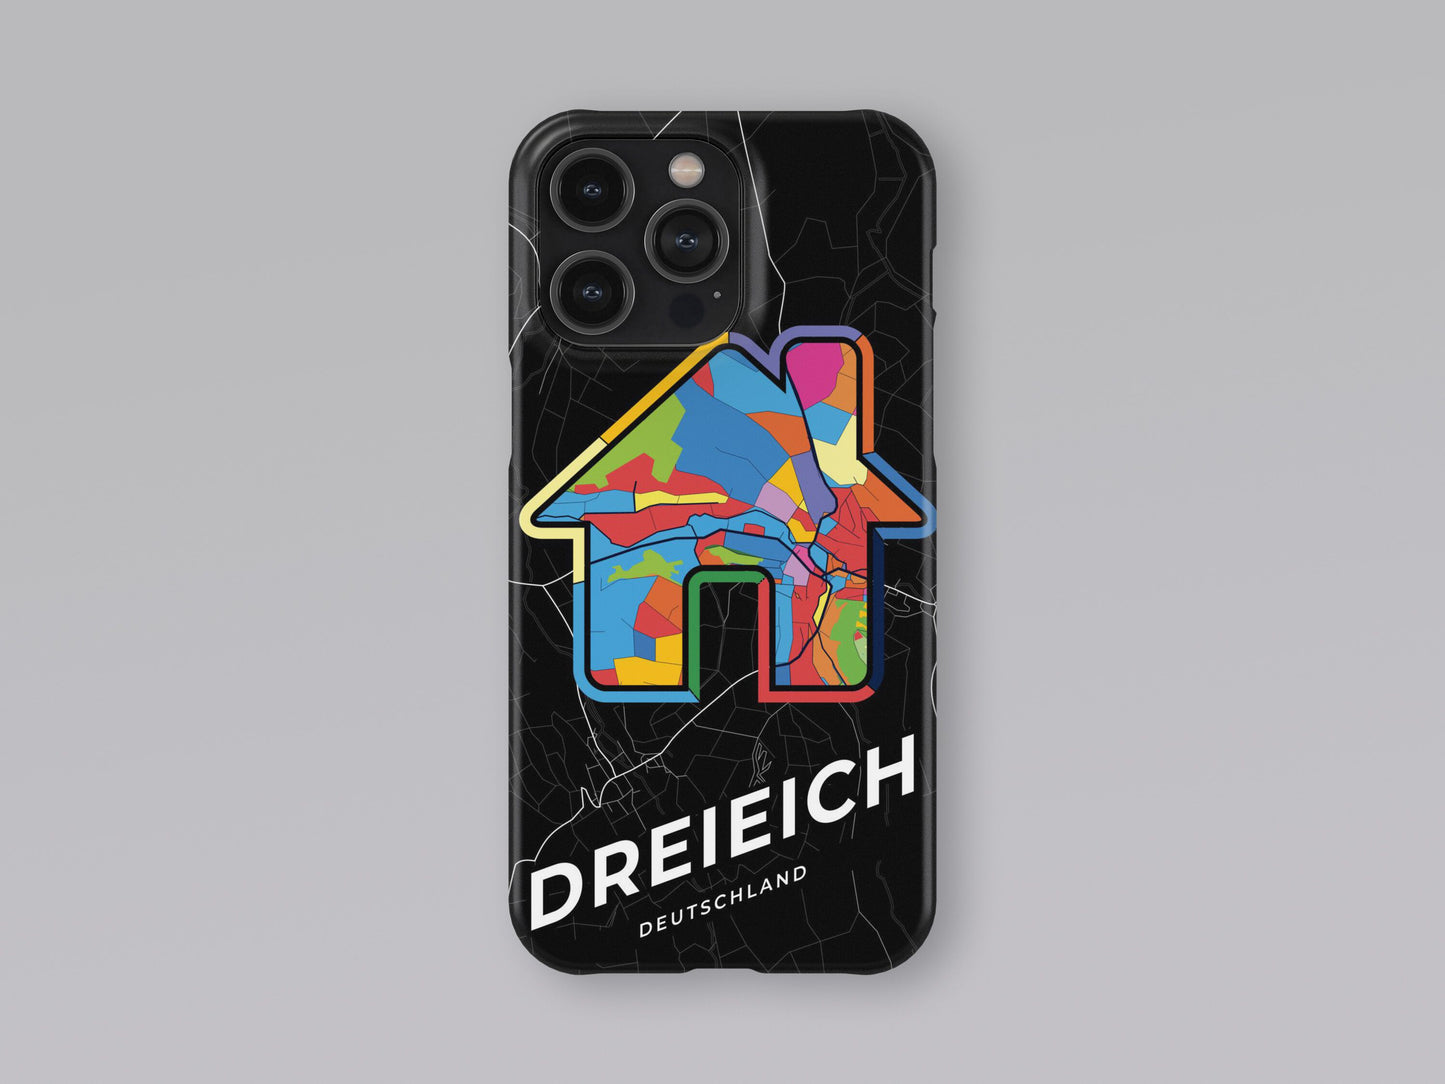 Dreieich Deutschland slim phone case with colorful icon. Birthday, wedding or housewarming gift. Couple match cases. 3